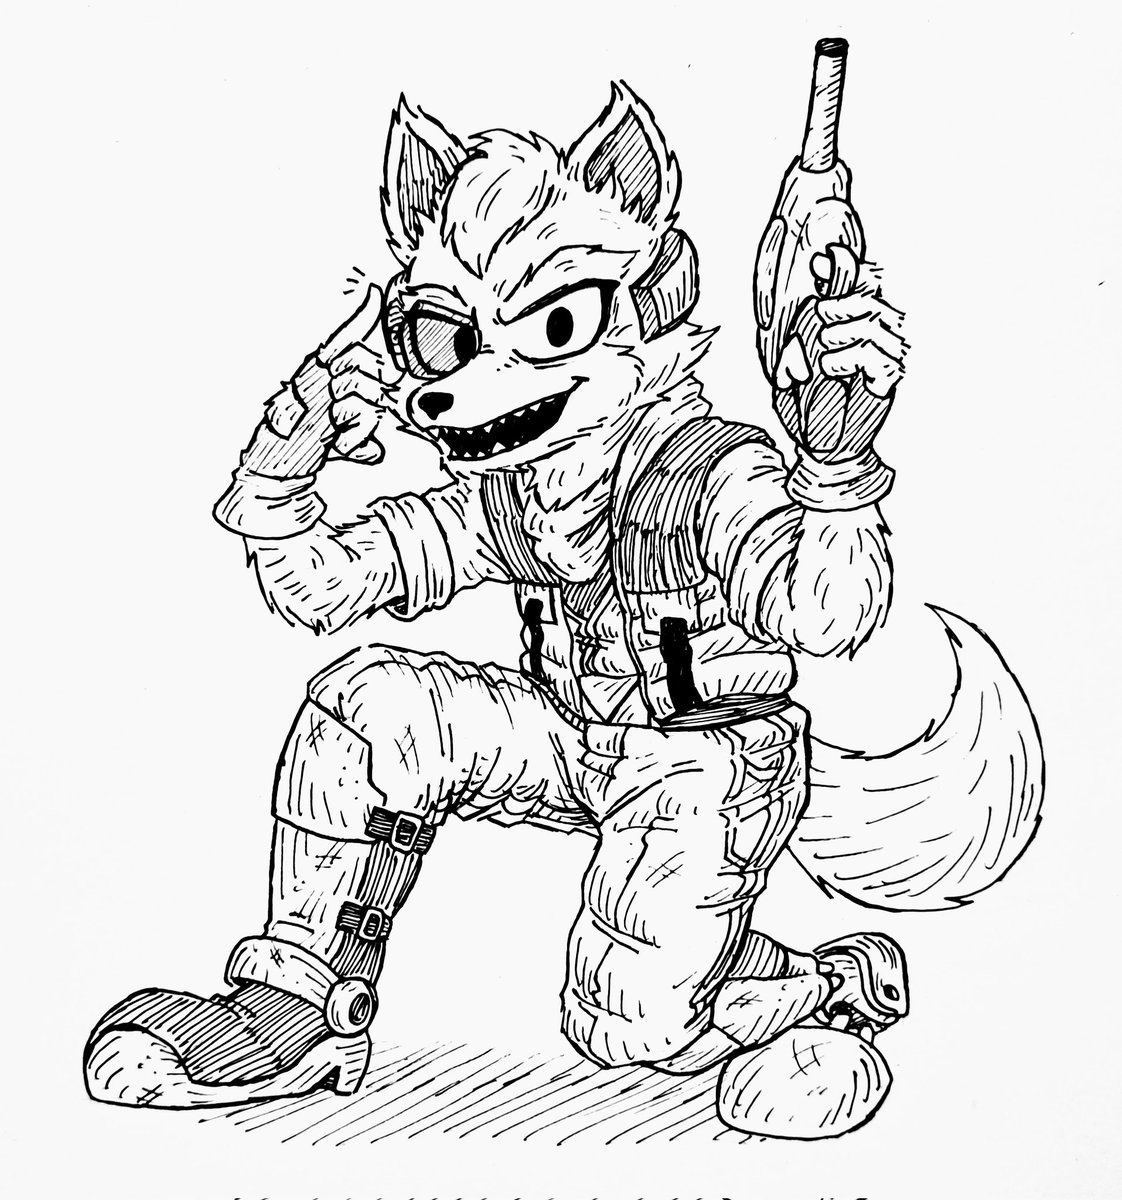 Fox doodle. Tried drawing him a bit more on model

#StarFox